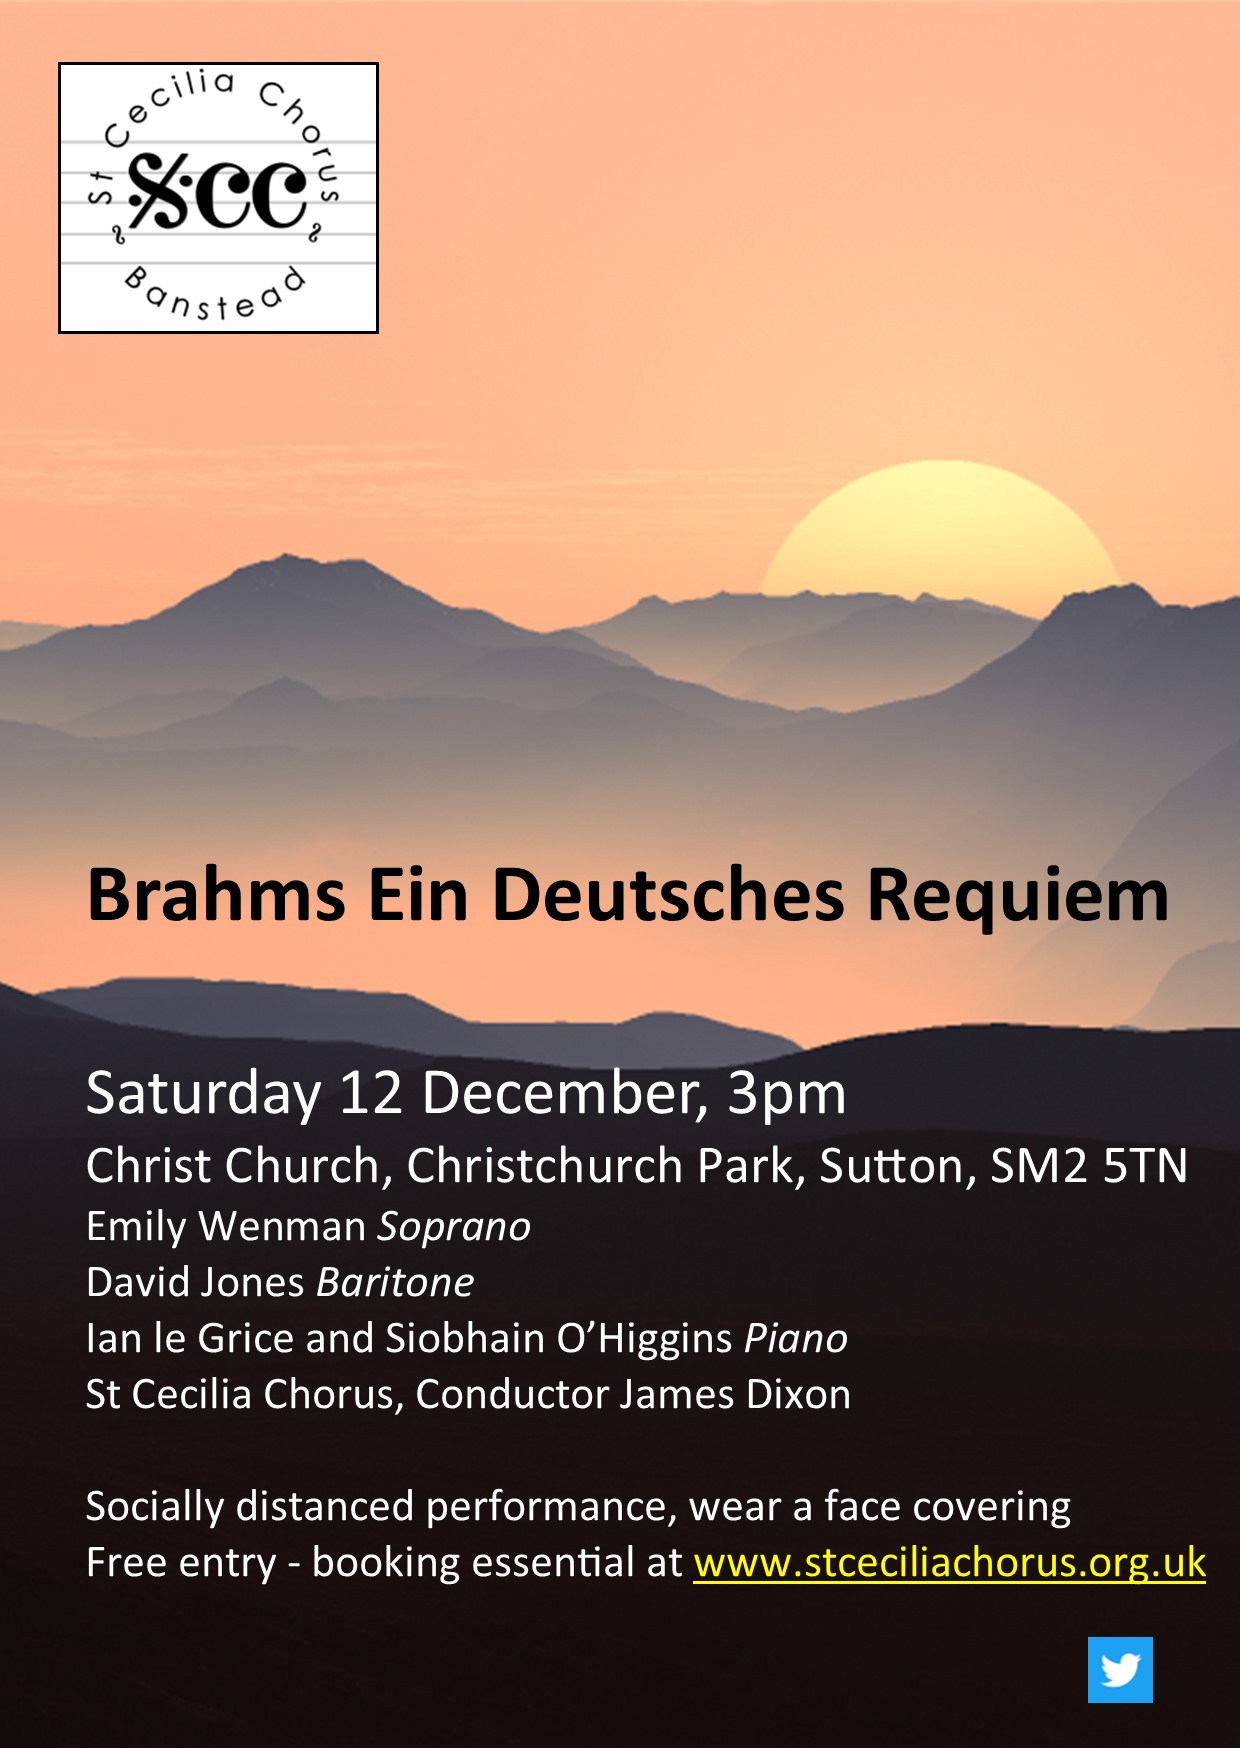 Concert: Brahms' Requiem